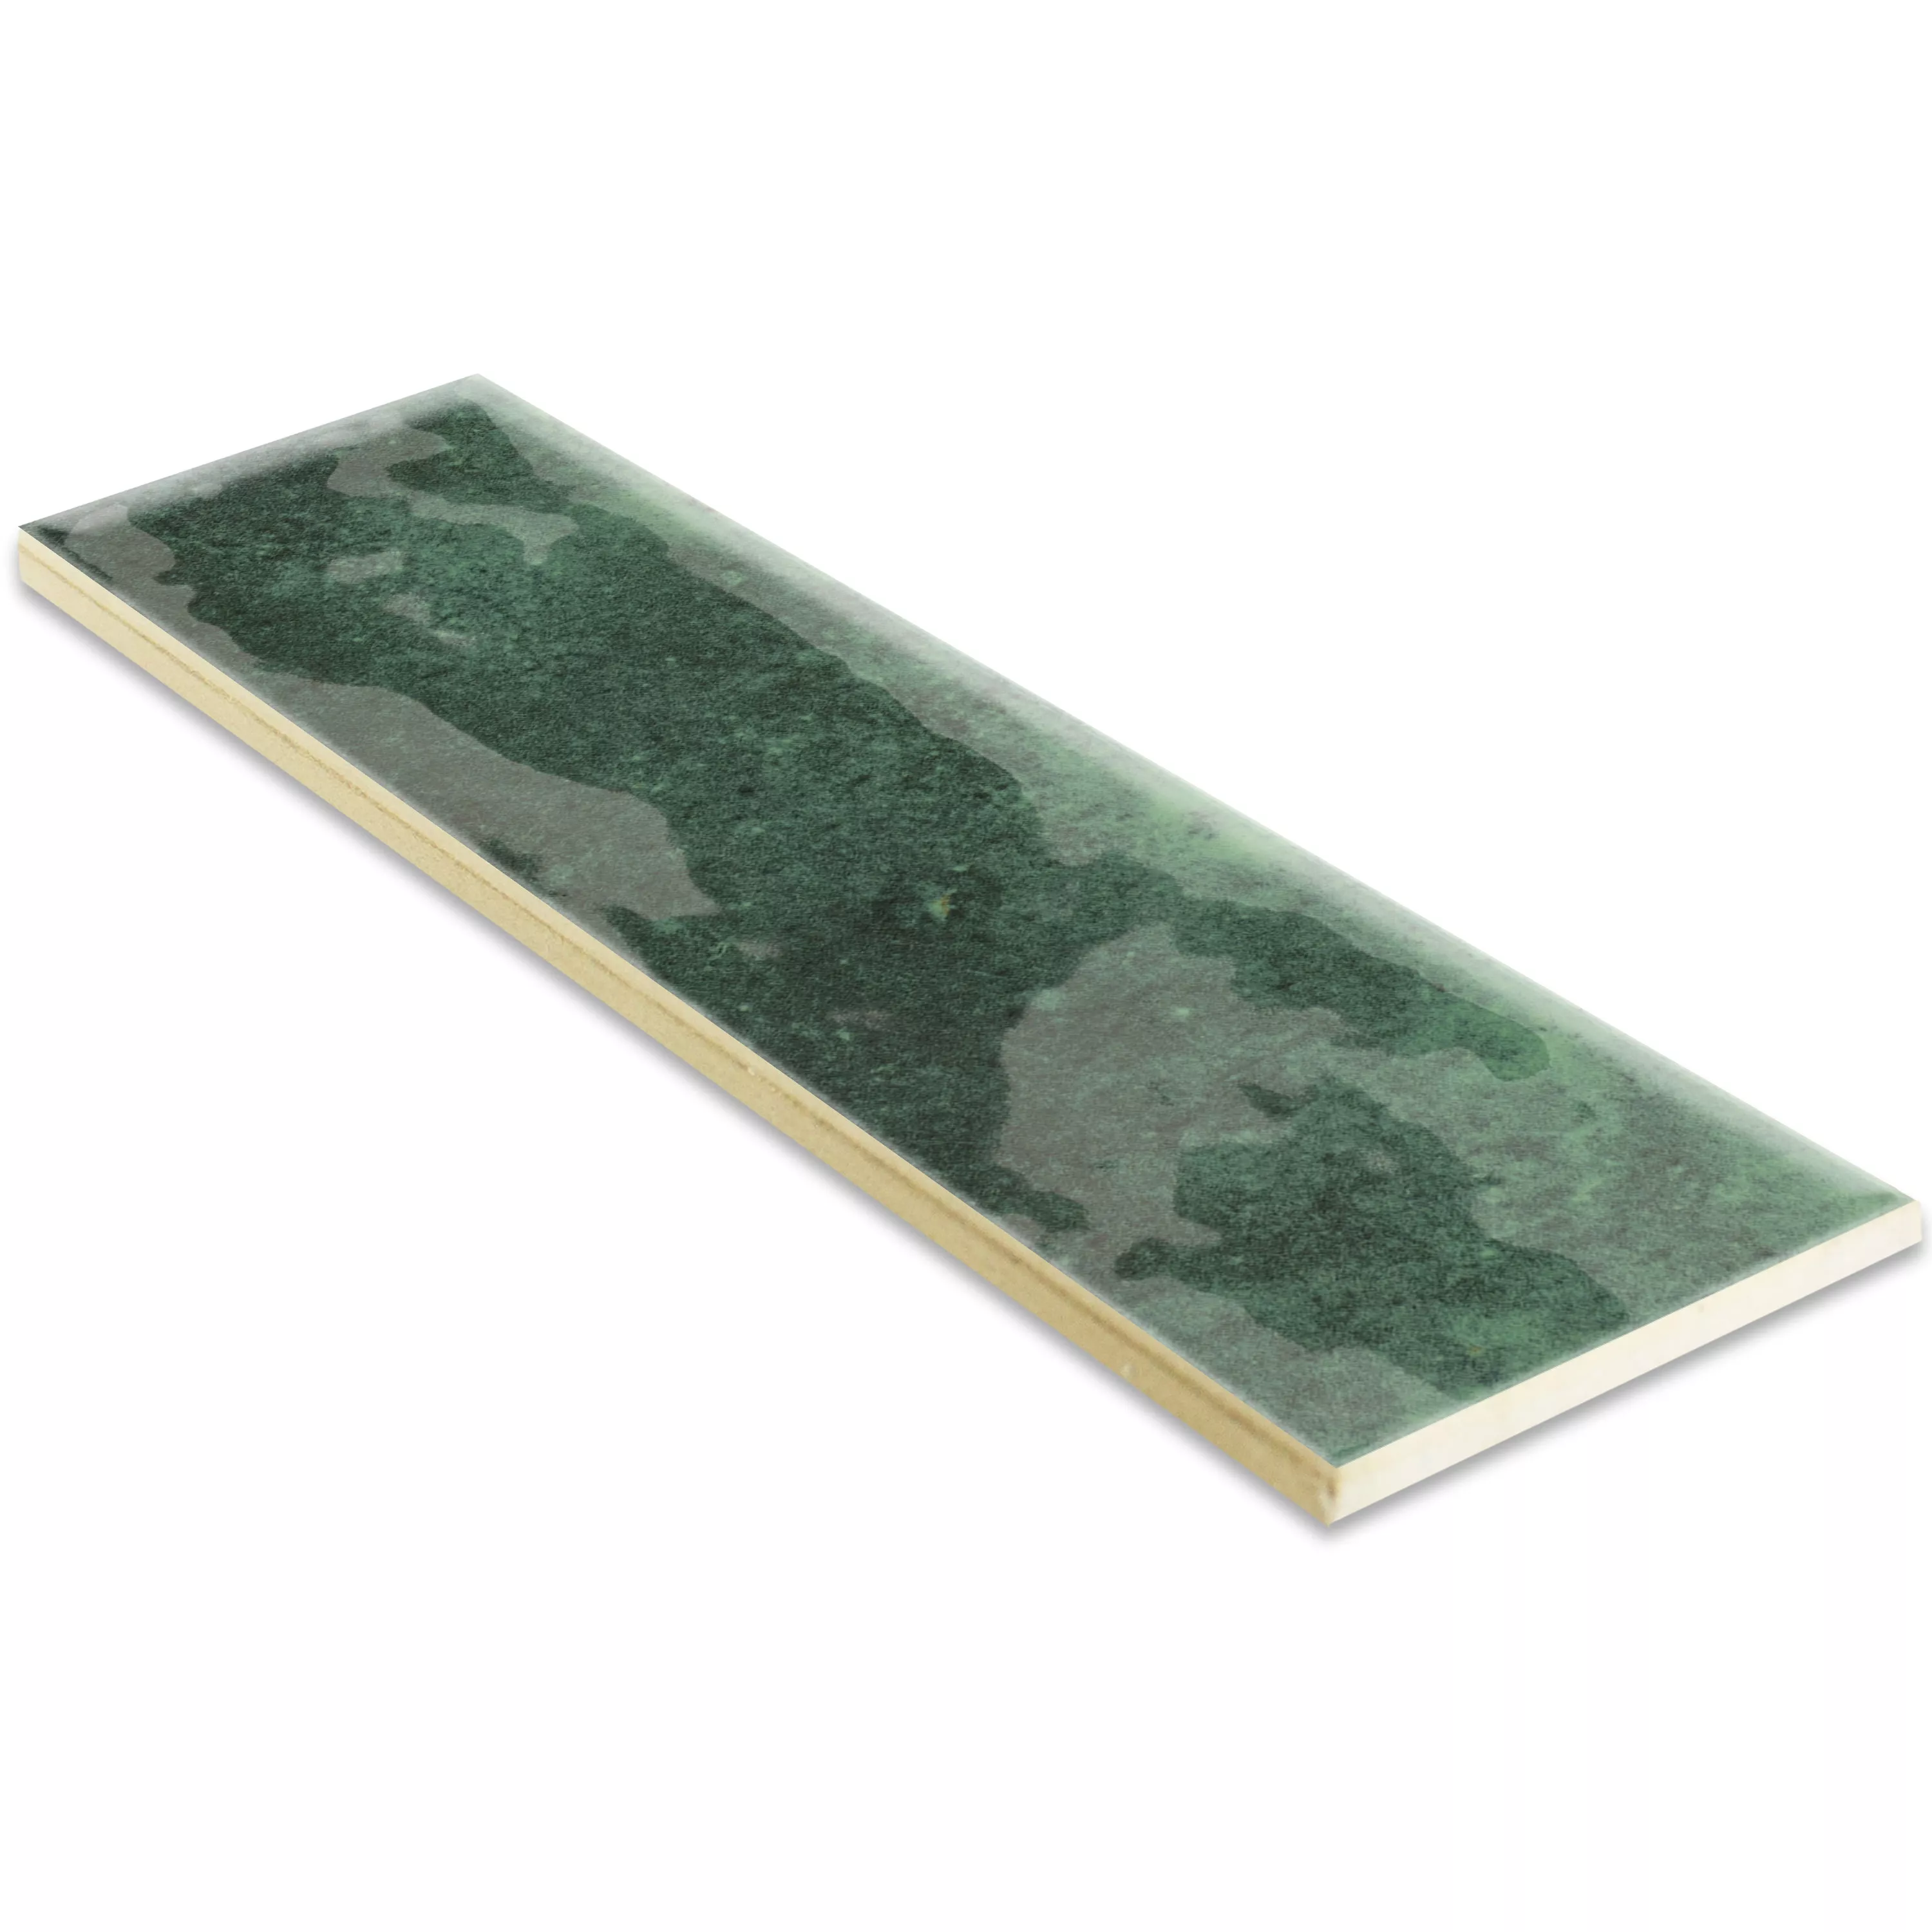 Sample Wall Tiles Arosa Glossy Waved Emerald Green 6x25cm